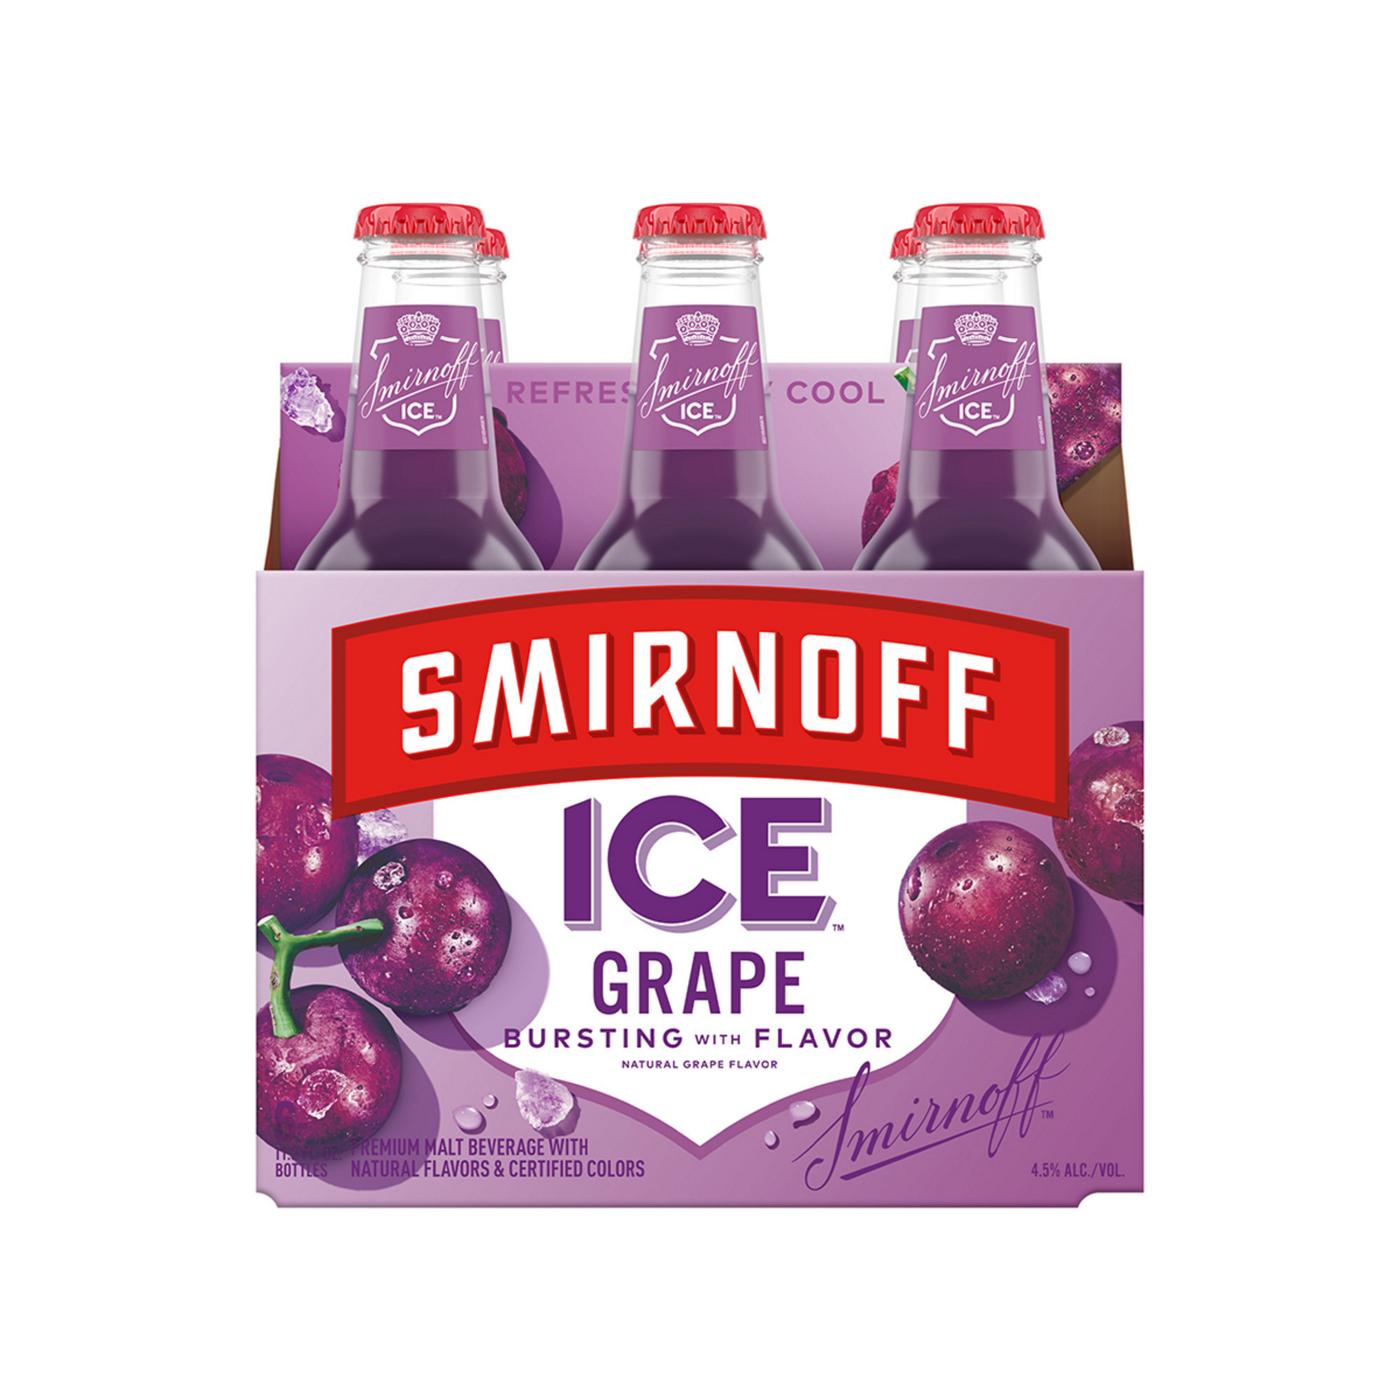 Smirnoff Ice Grape; image 1 of 3